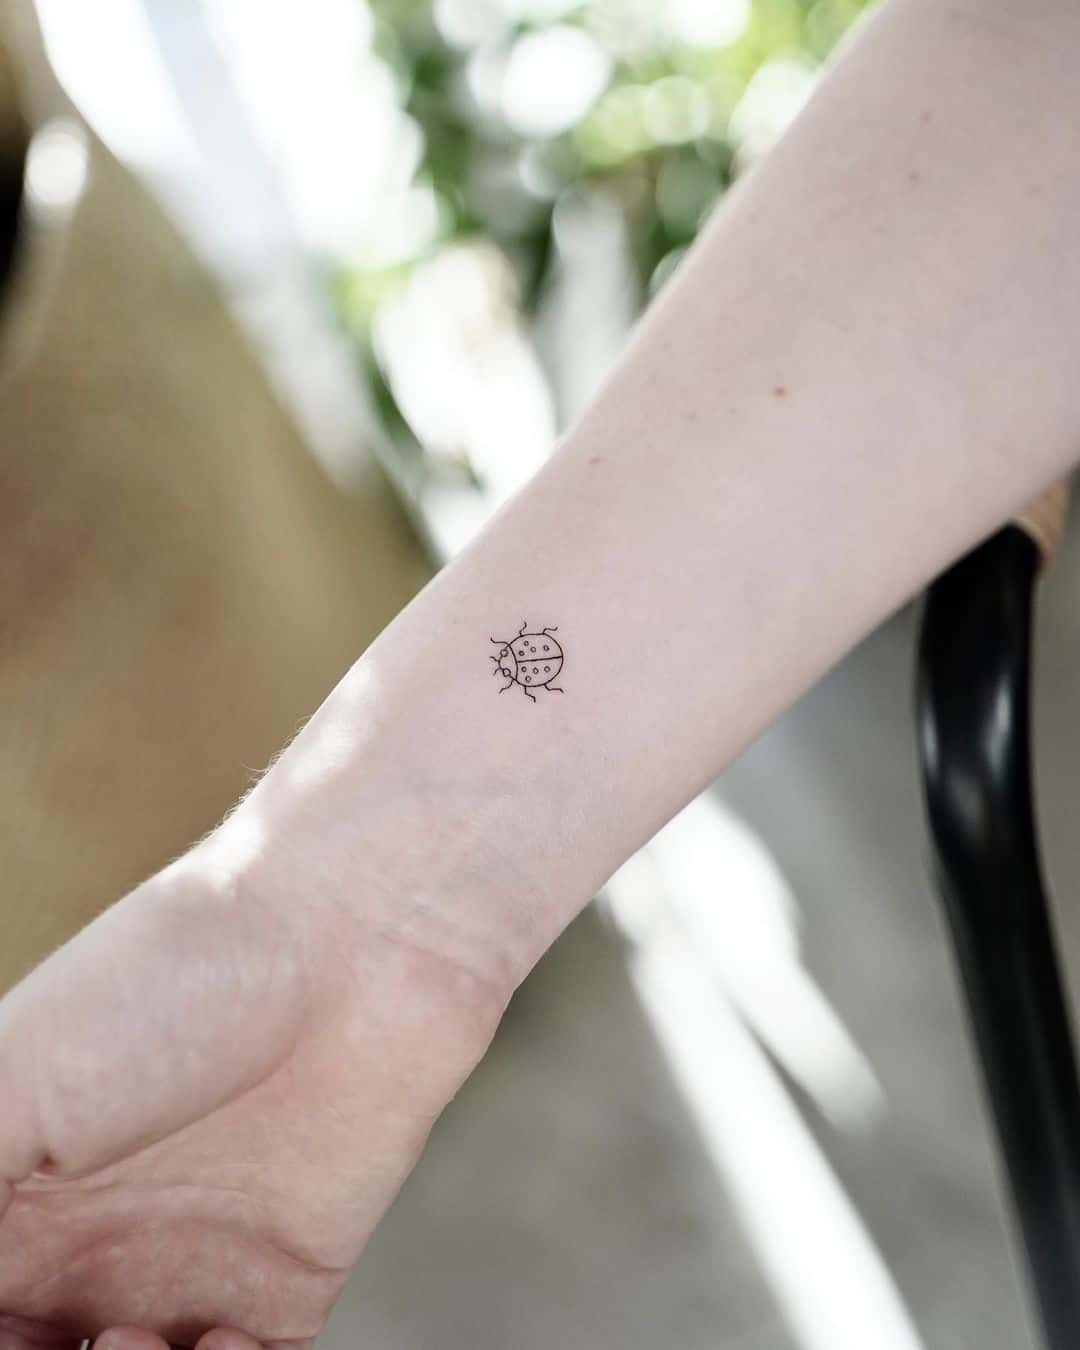 Lady bug tattoo by tattoocute